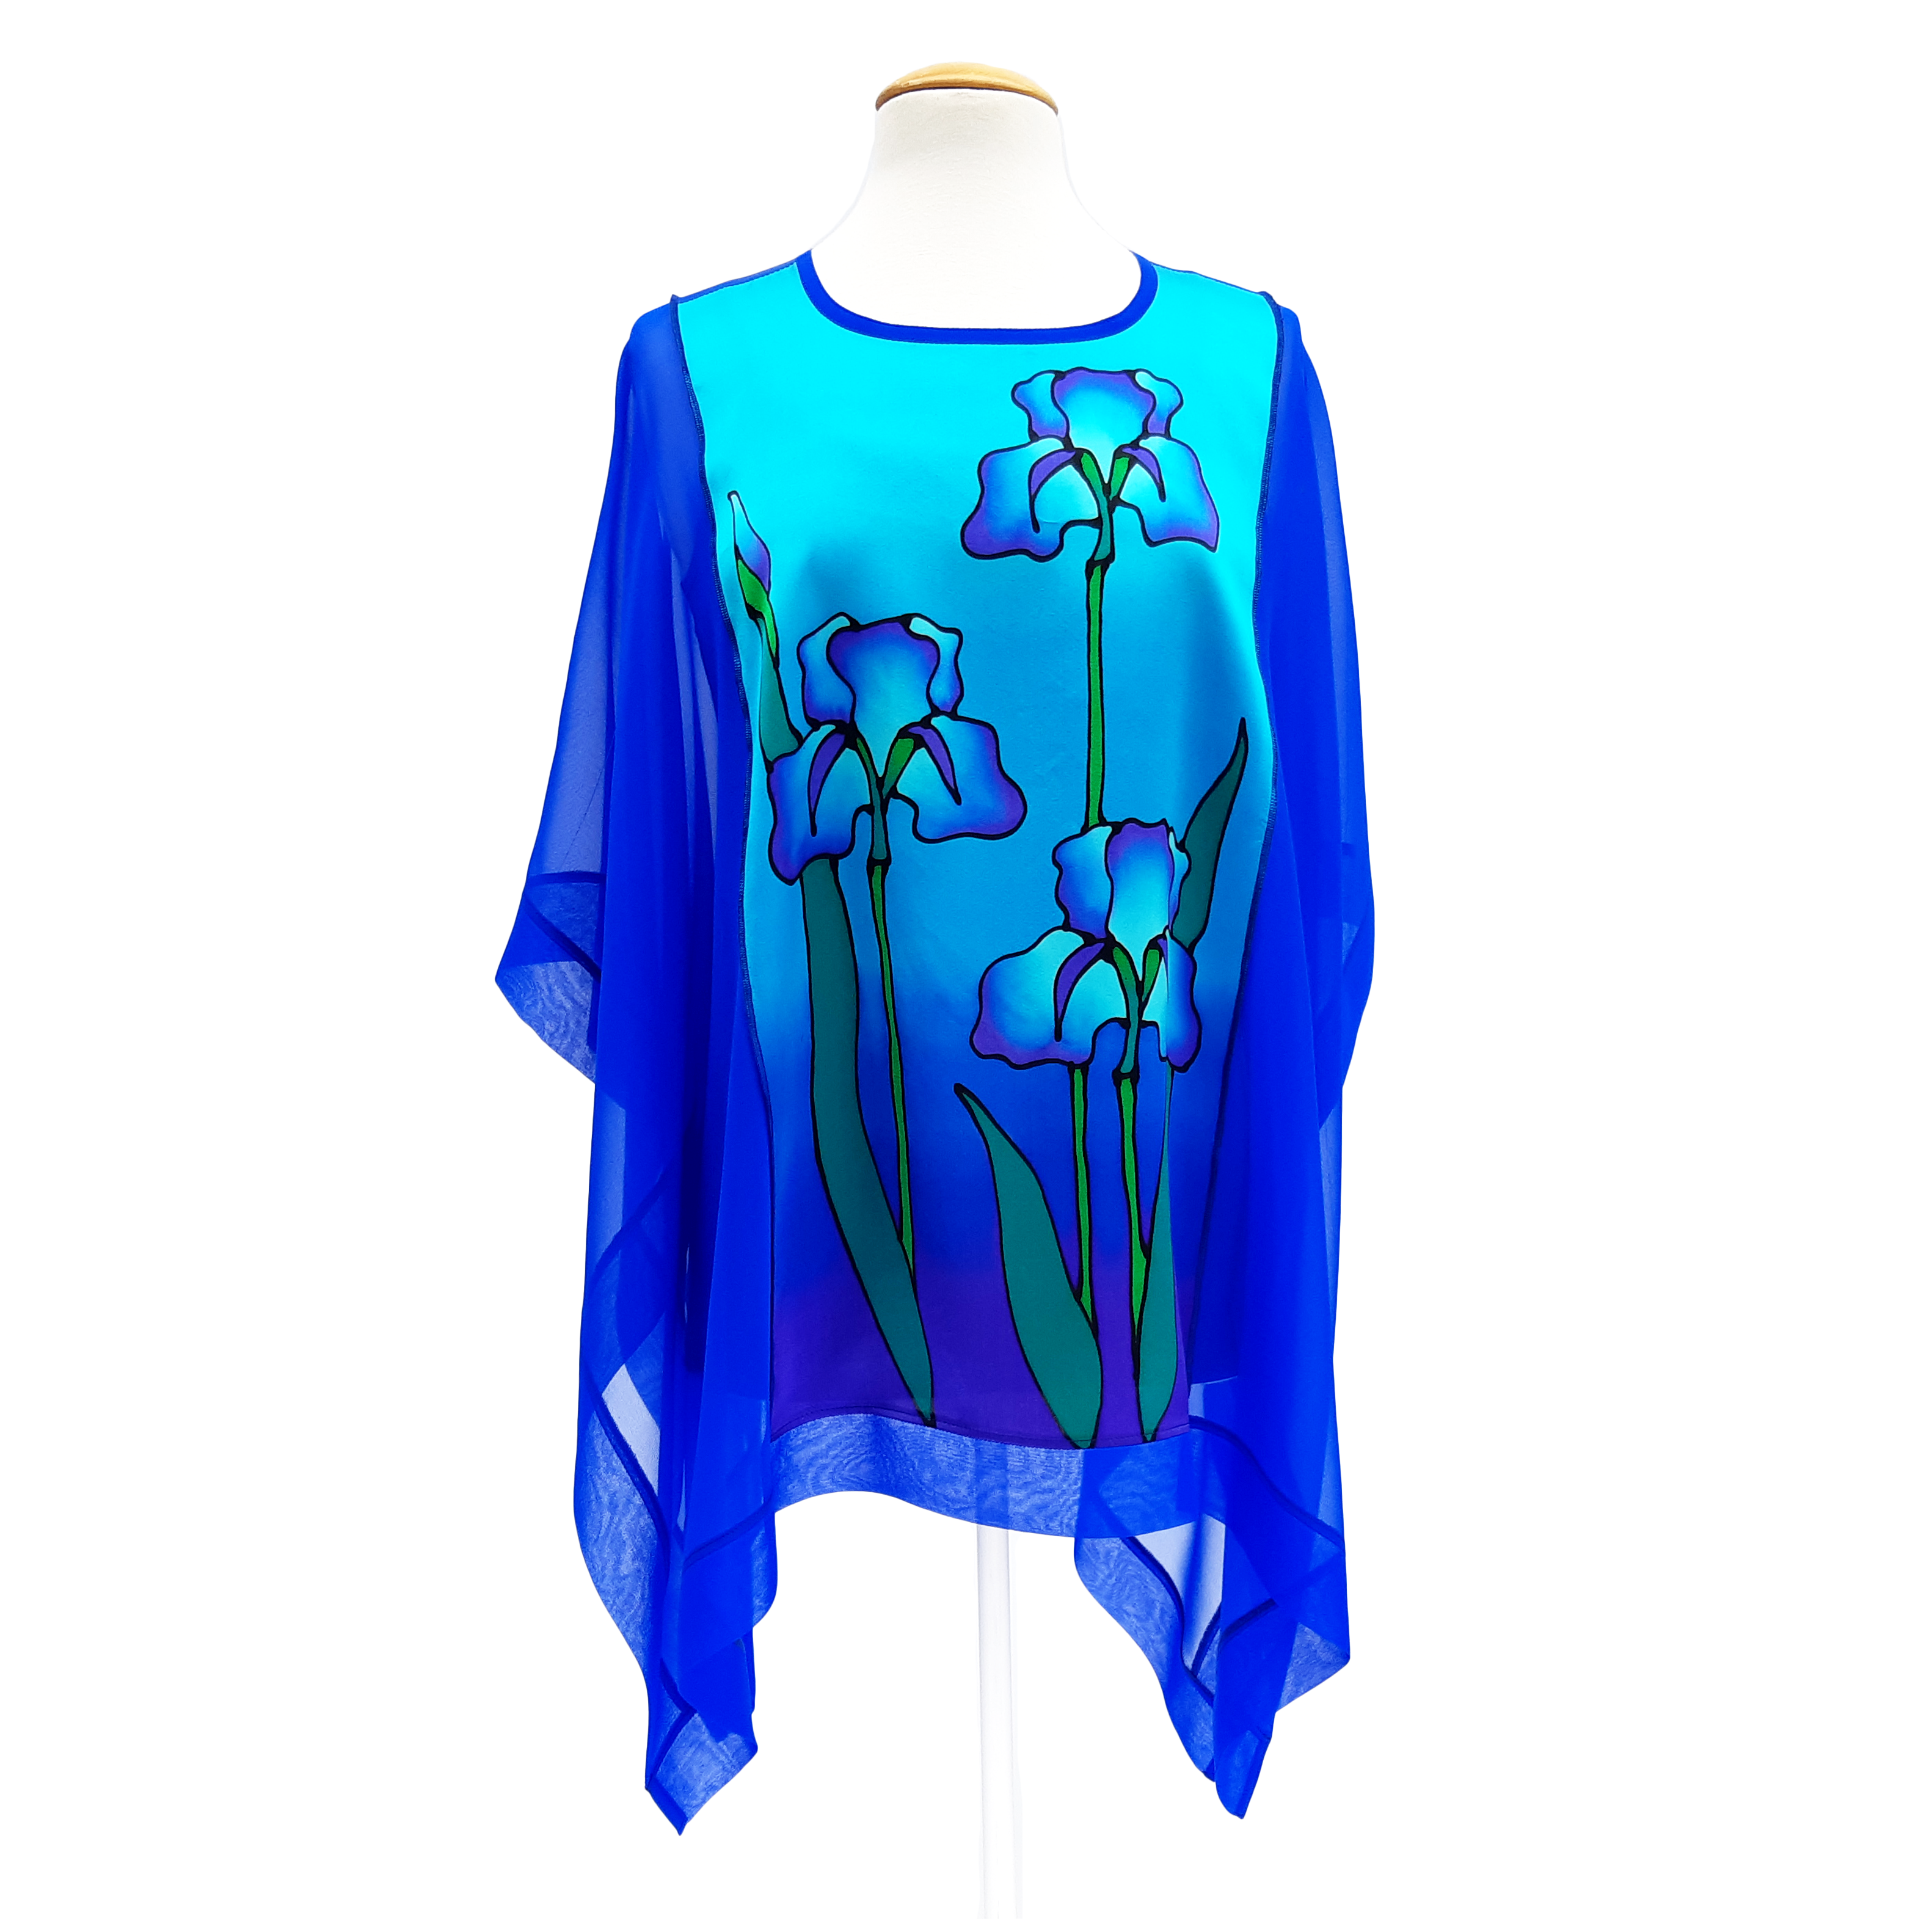 one size plus size ladies top hand painted silk blue iris art design made by Lynne Kiel